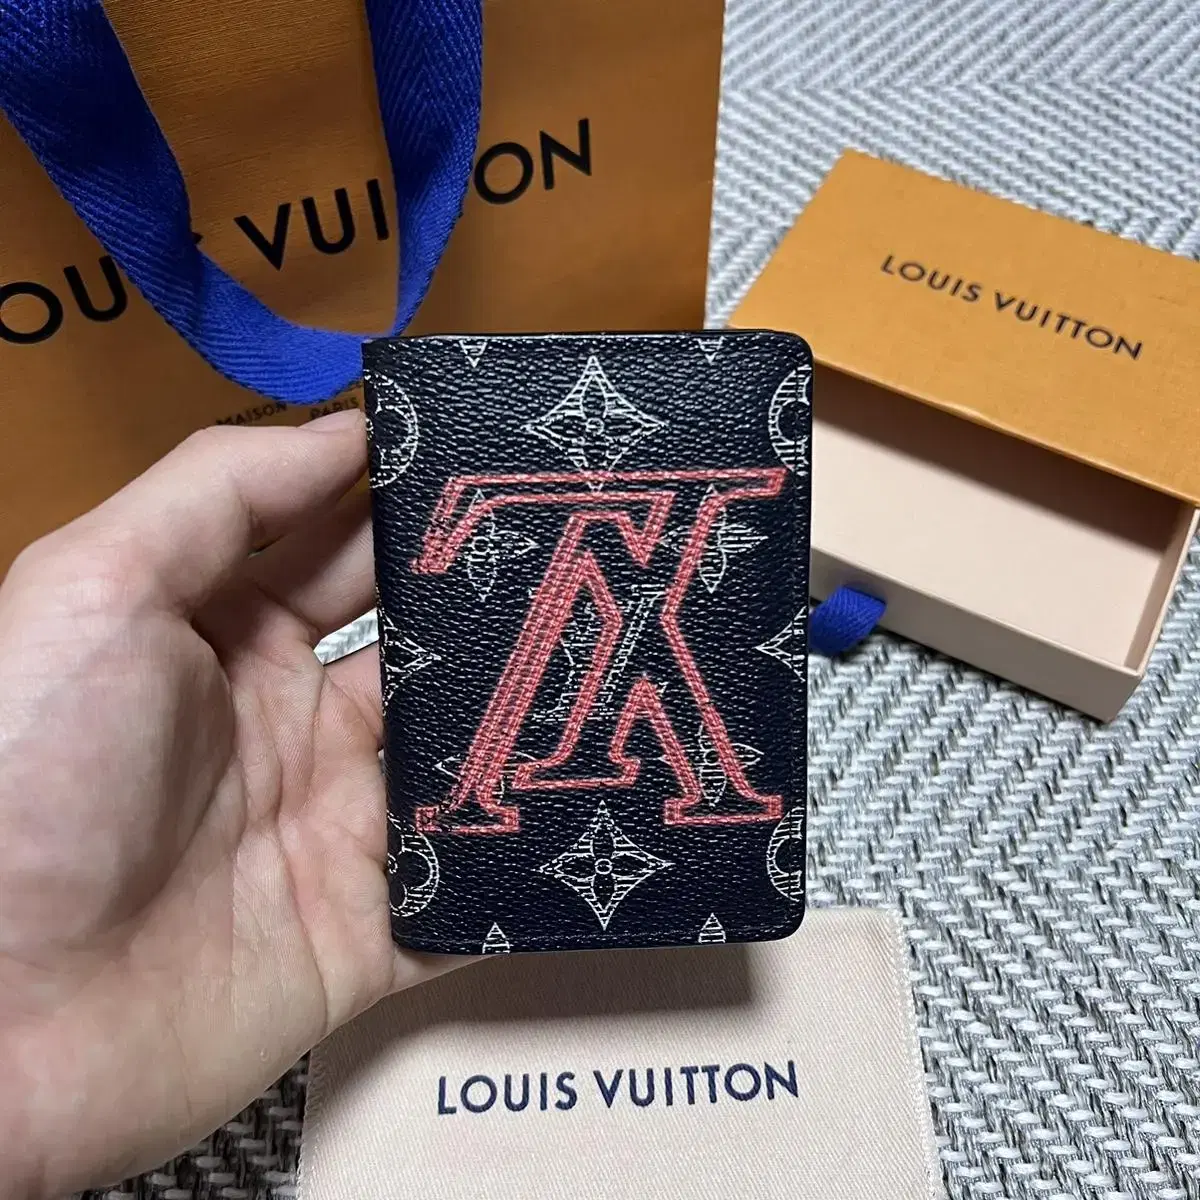 Replica Louis Vuitton Monogram Upside Down Canvas Pocket Organizer m62889